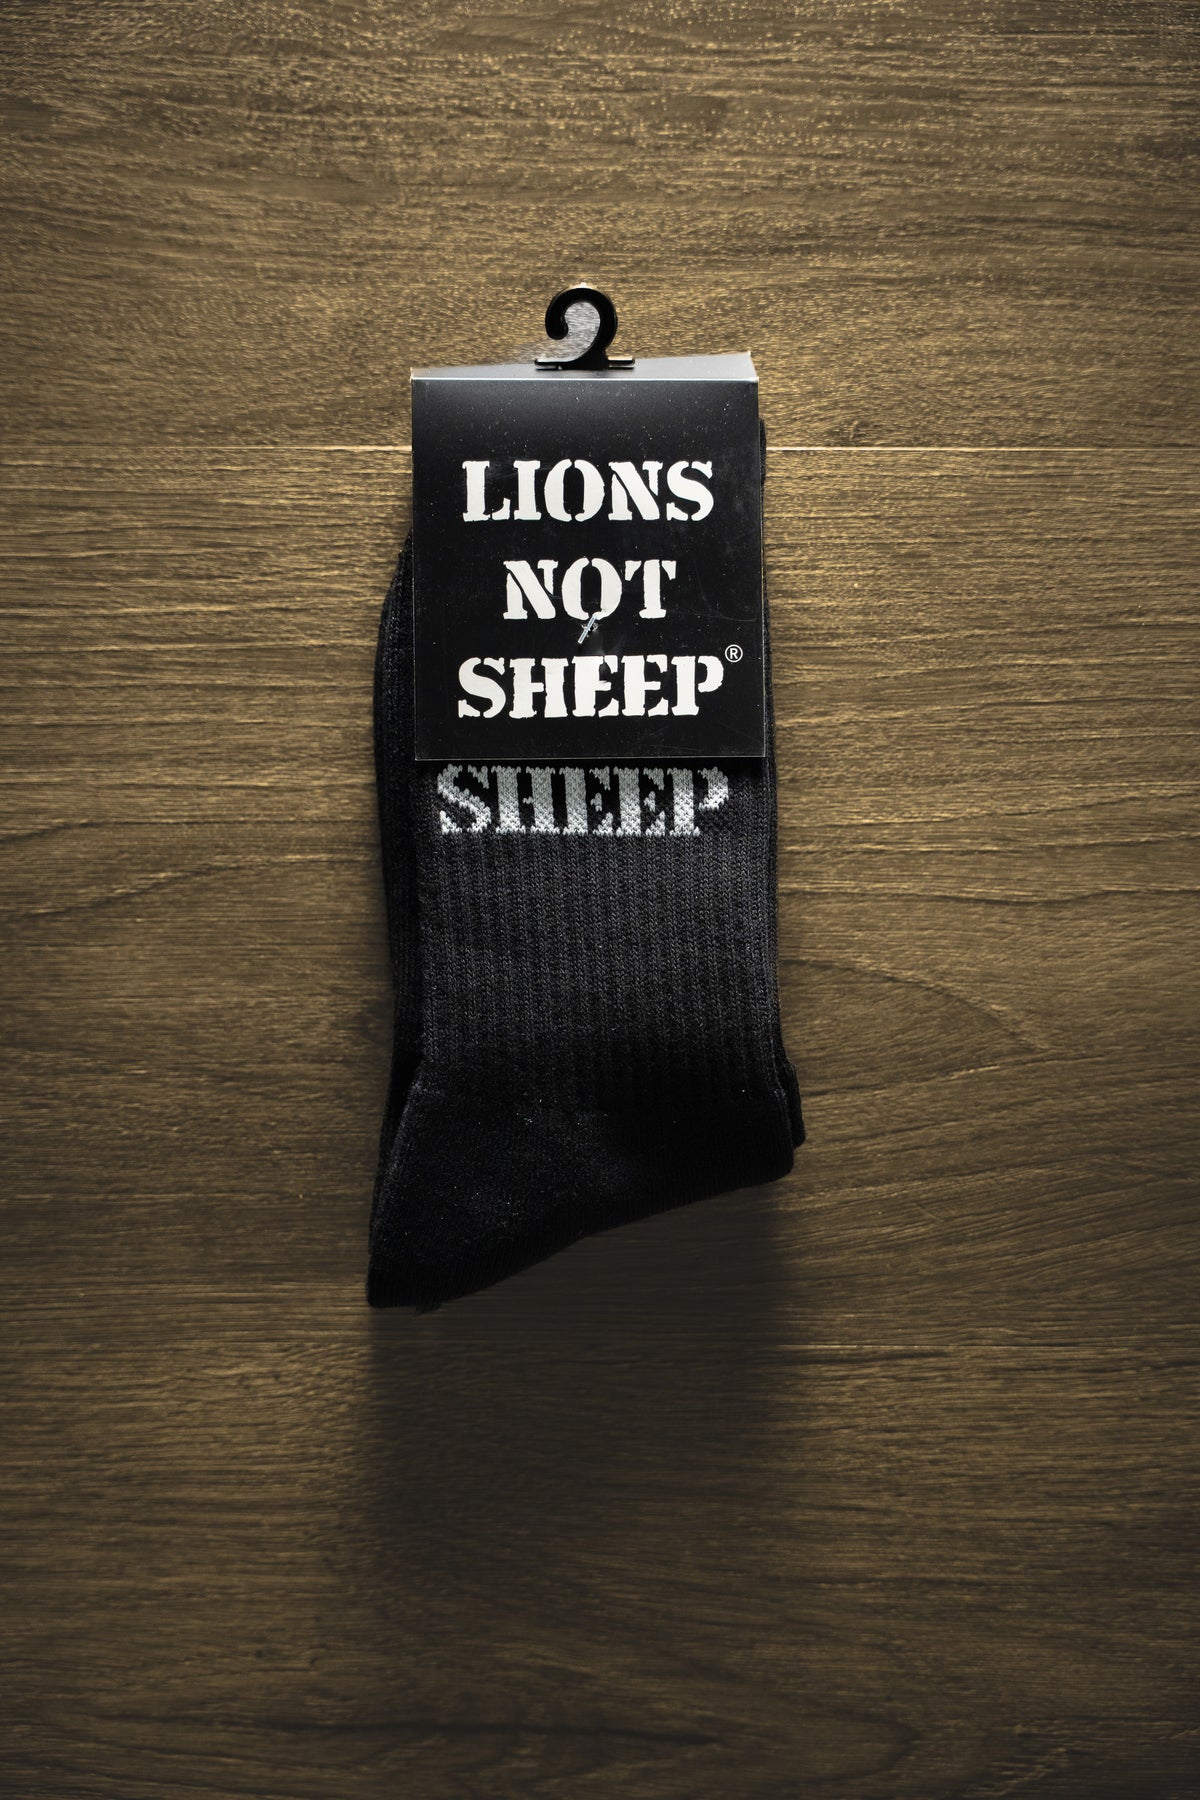 Lions Not Sheep &quot;OG&quot; Socks - Lions Not Sheep ®